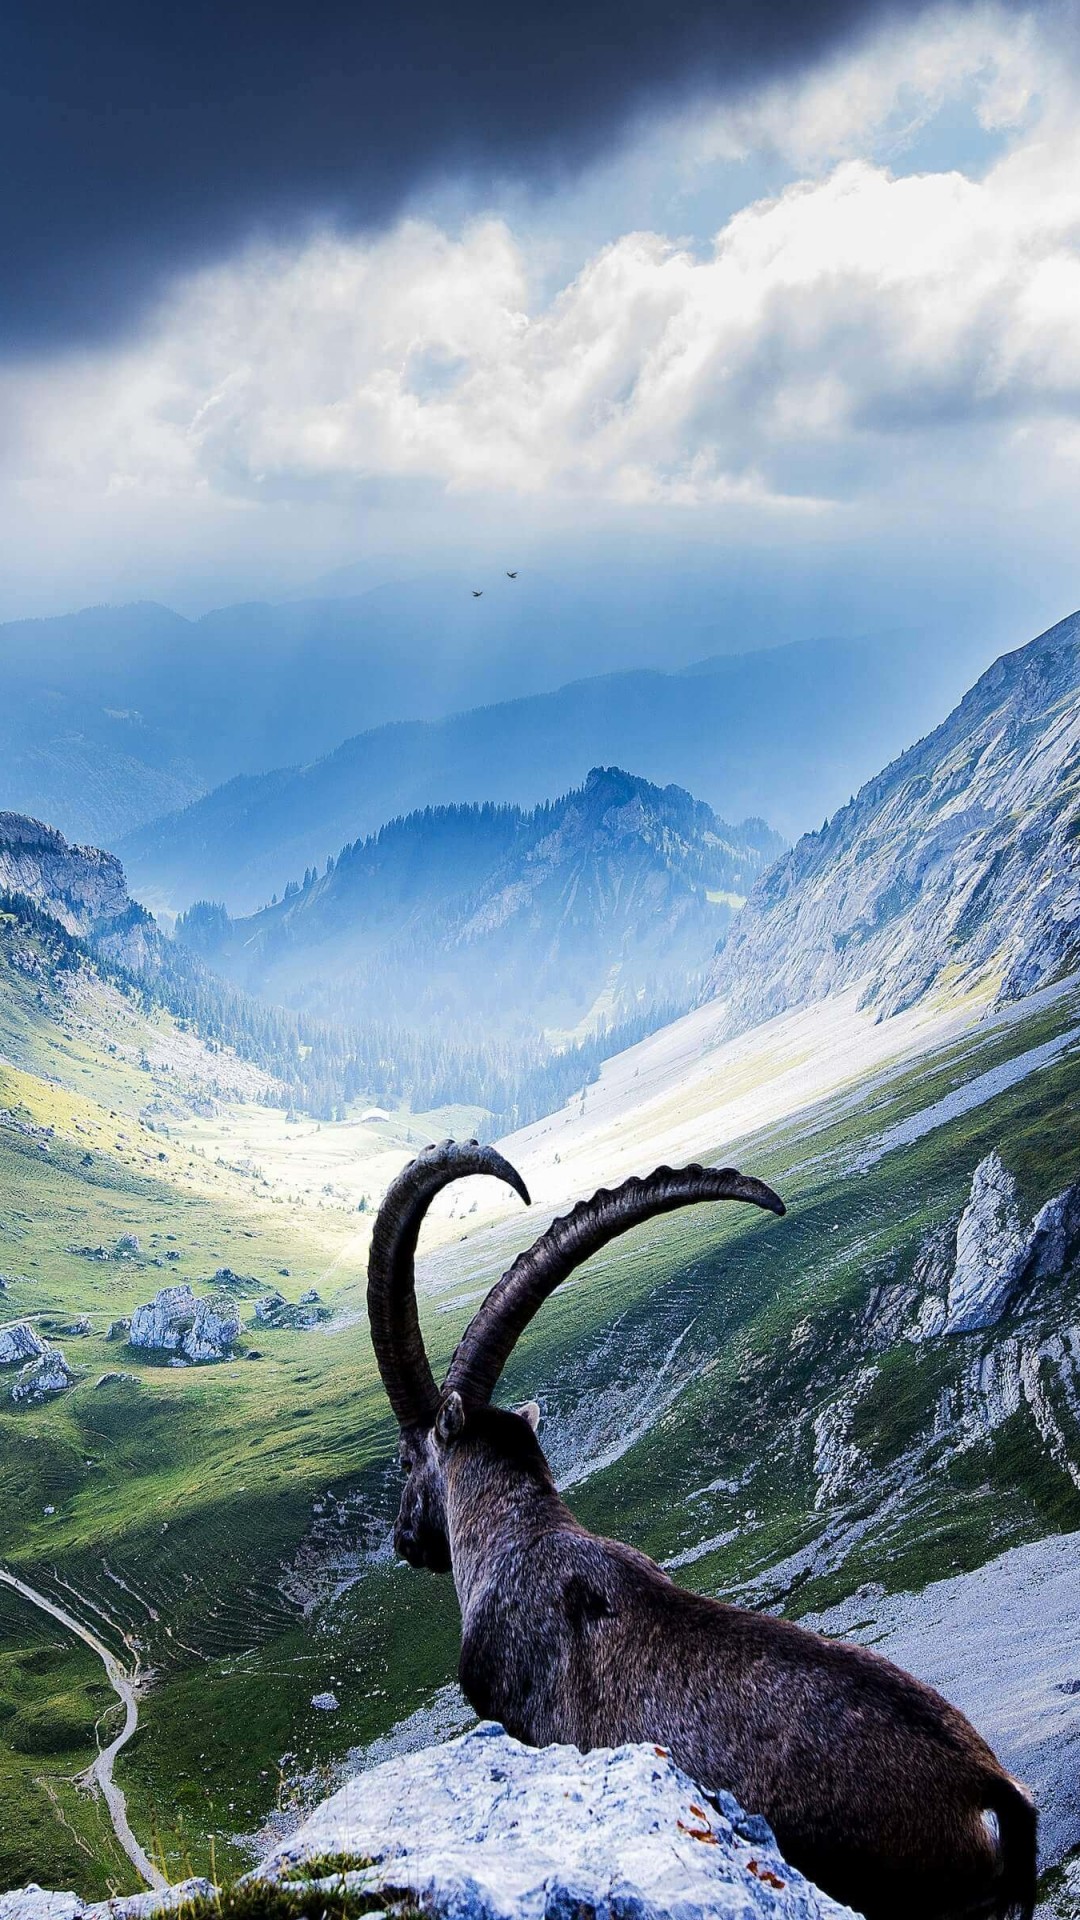 Goat at Pilatus, Switzerland Wallpaper for HTC One